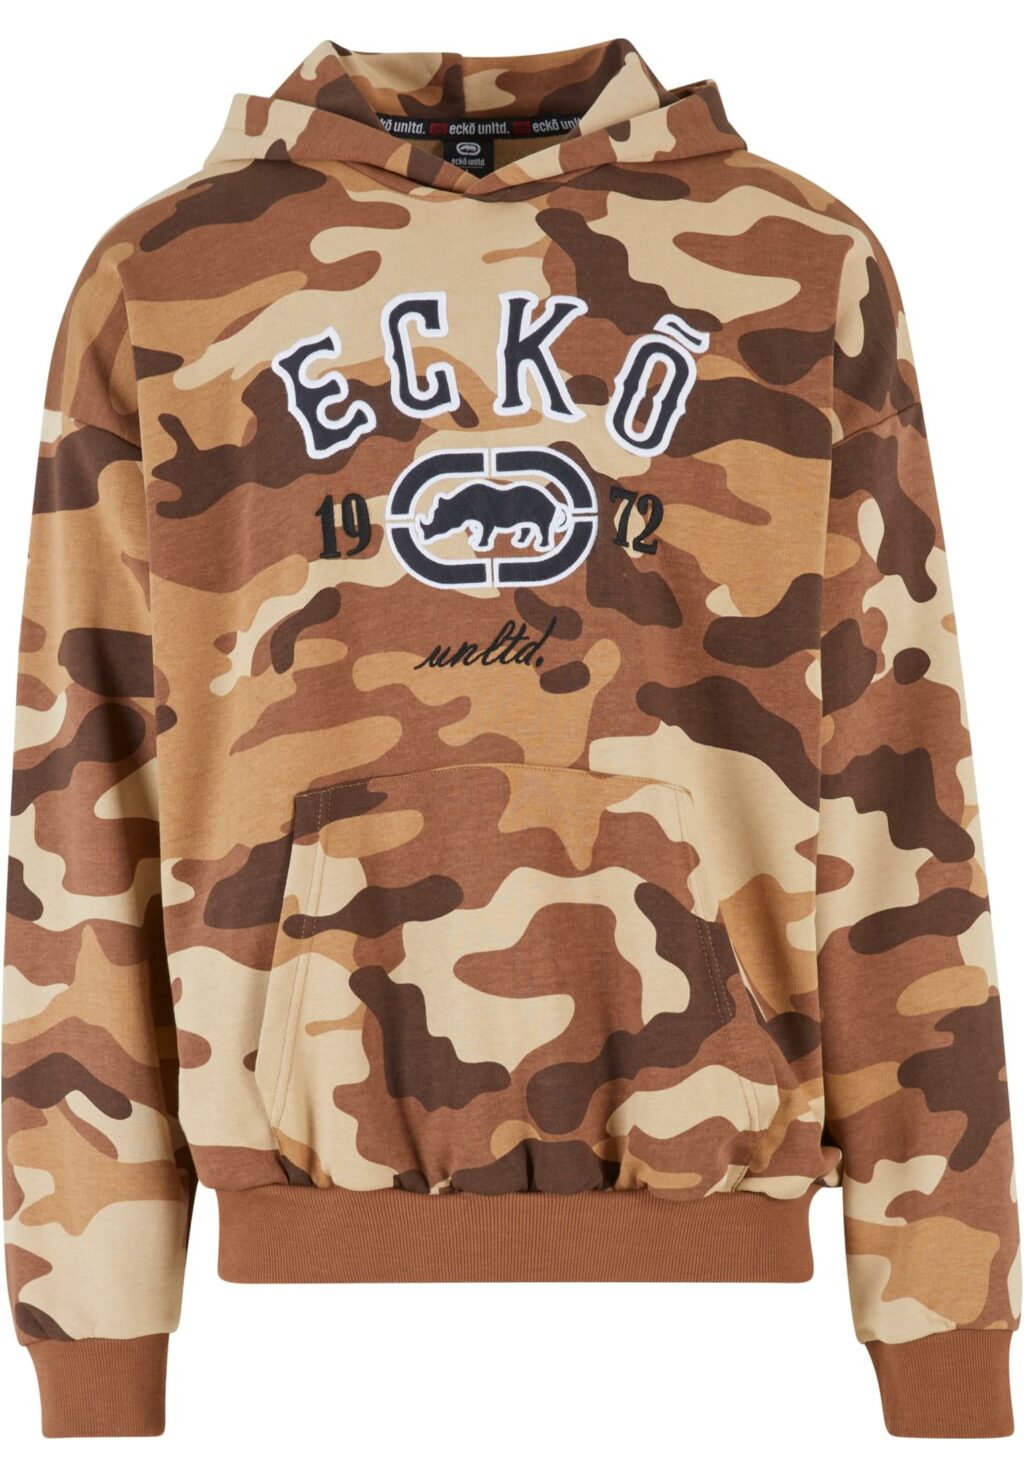 Ecko Unltd. Hoody brown ECKOHD1116